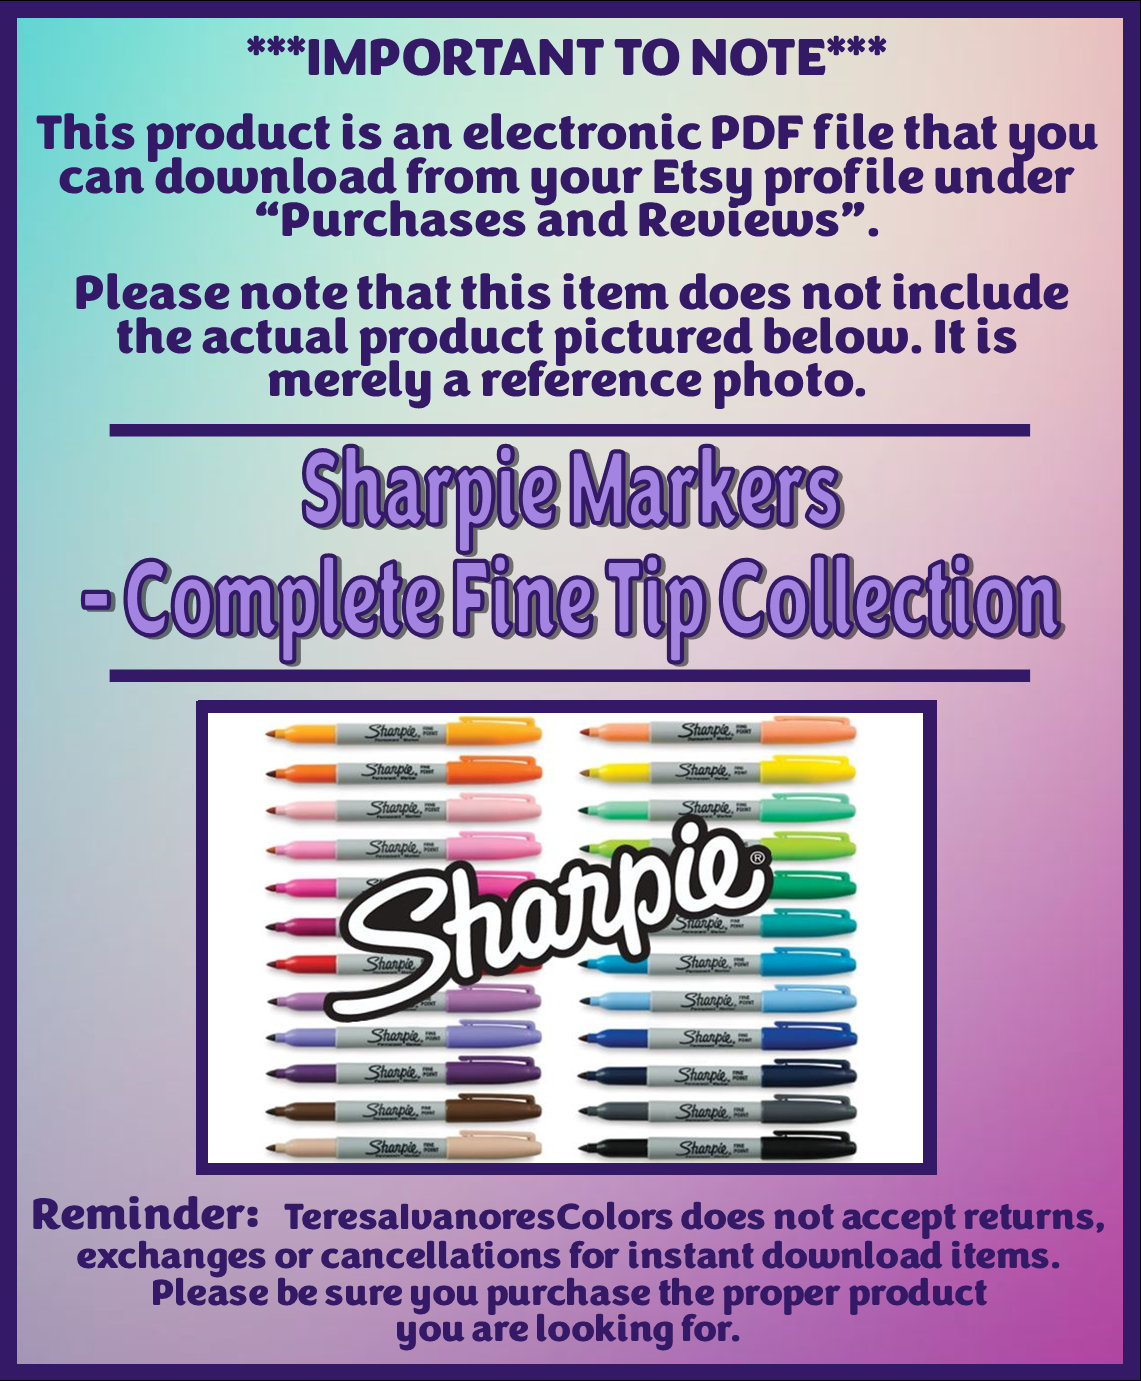 Sharpie Mini Pens 72pc Tub Assorted Colors